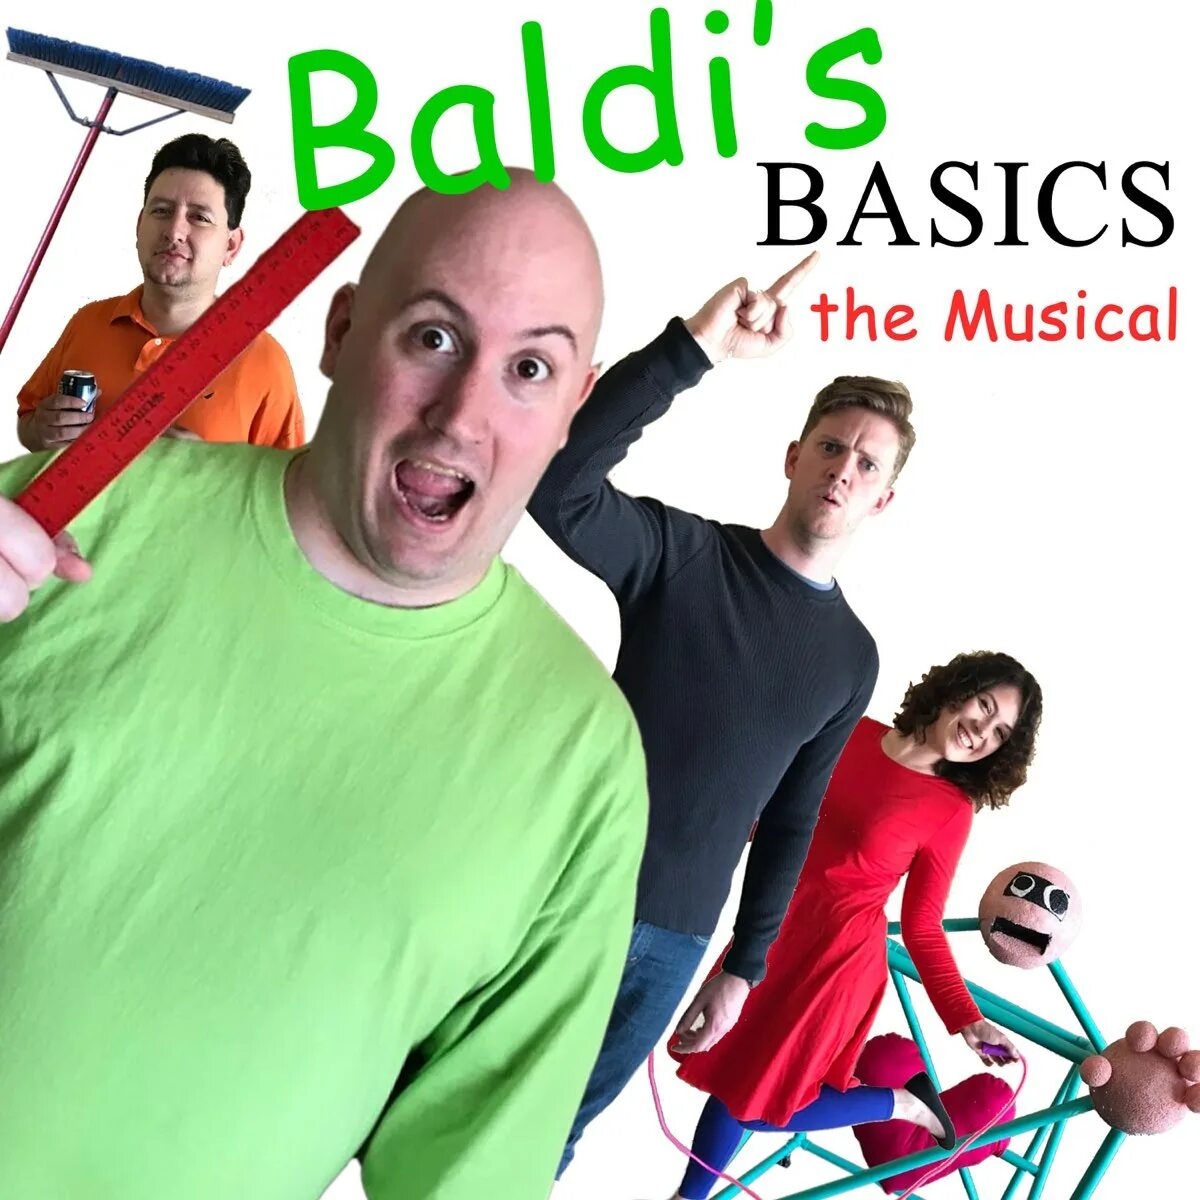 Baldi's Basics the Musical. Baldi Basics Musical. Random encounters Baldi's Basics:. БАЛДИ мюзикл на русском.